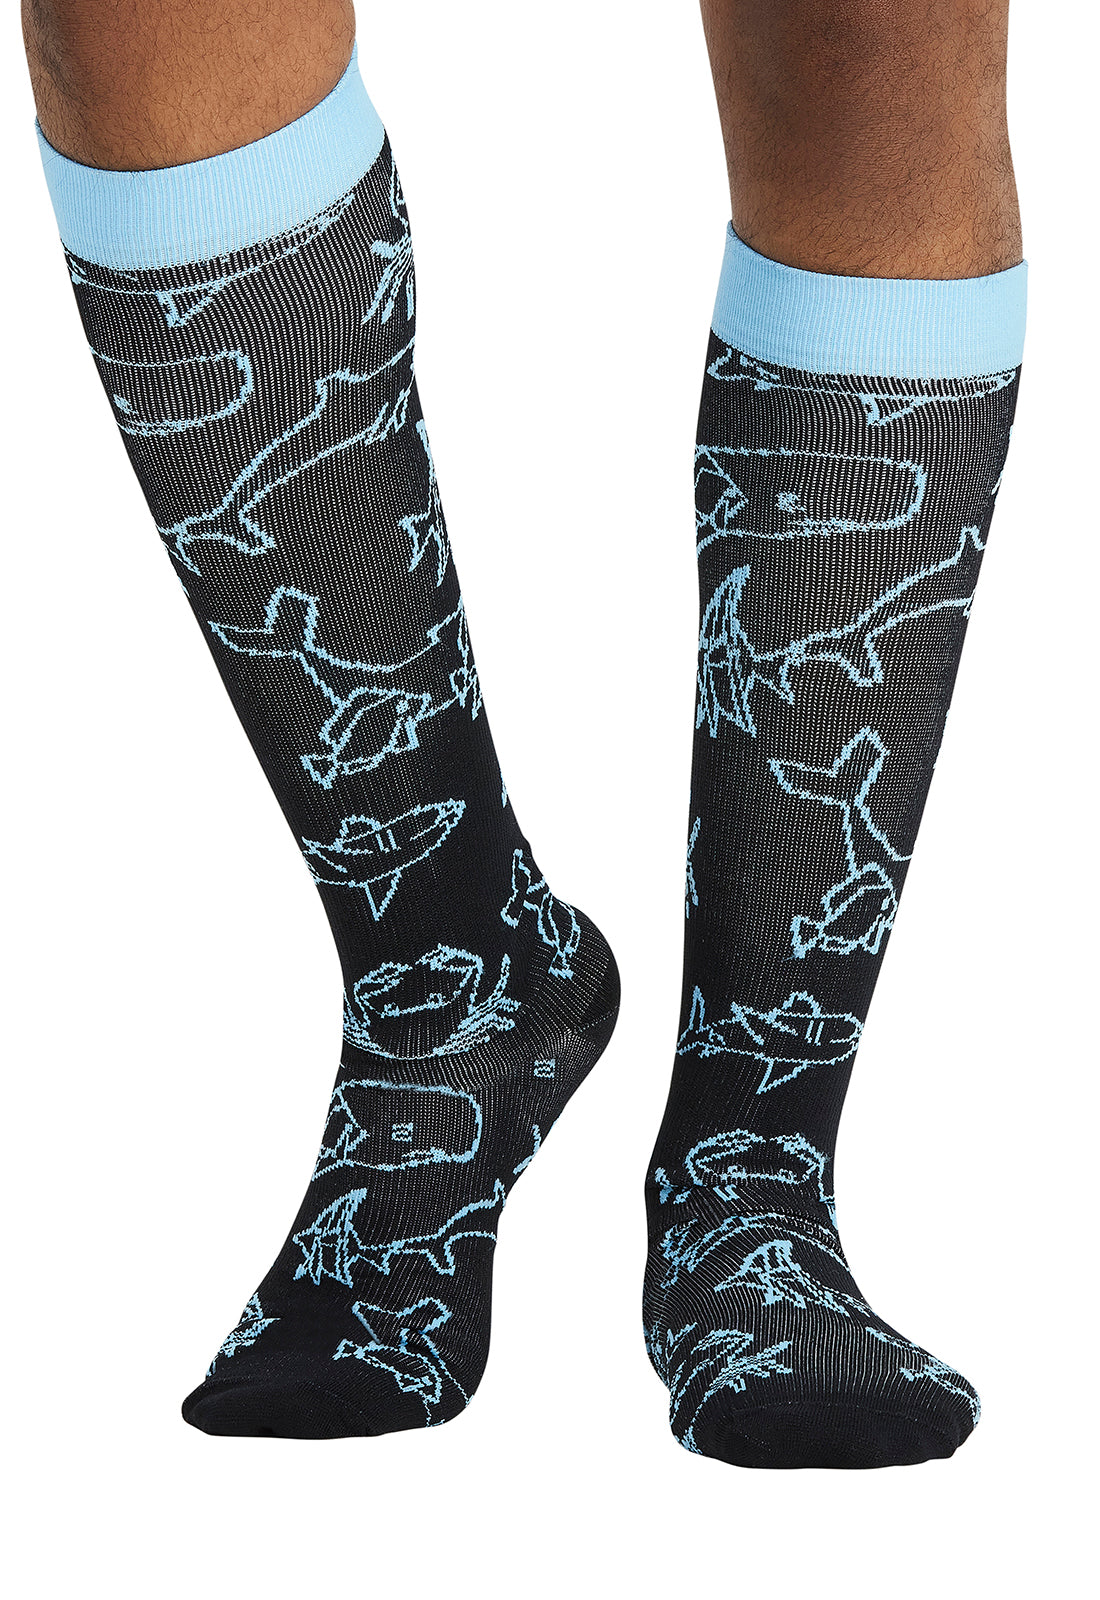 Men's Compression Socks 10-15mmHg Men's Compression Socks Cherokee Legwear Sea Sketch  